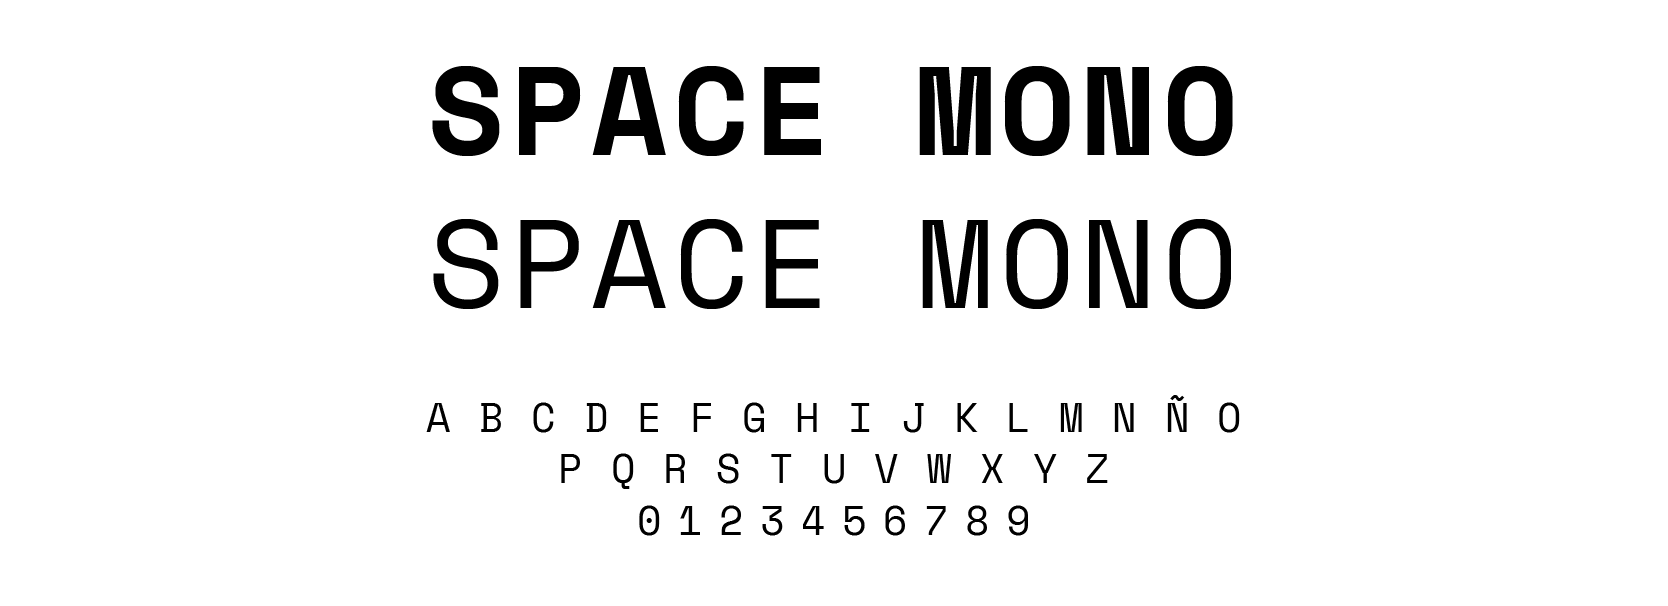 Space Mono Tipografía Google Fonts